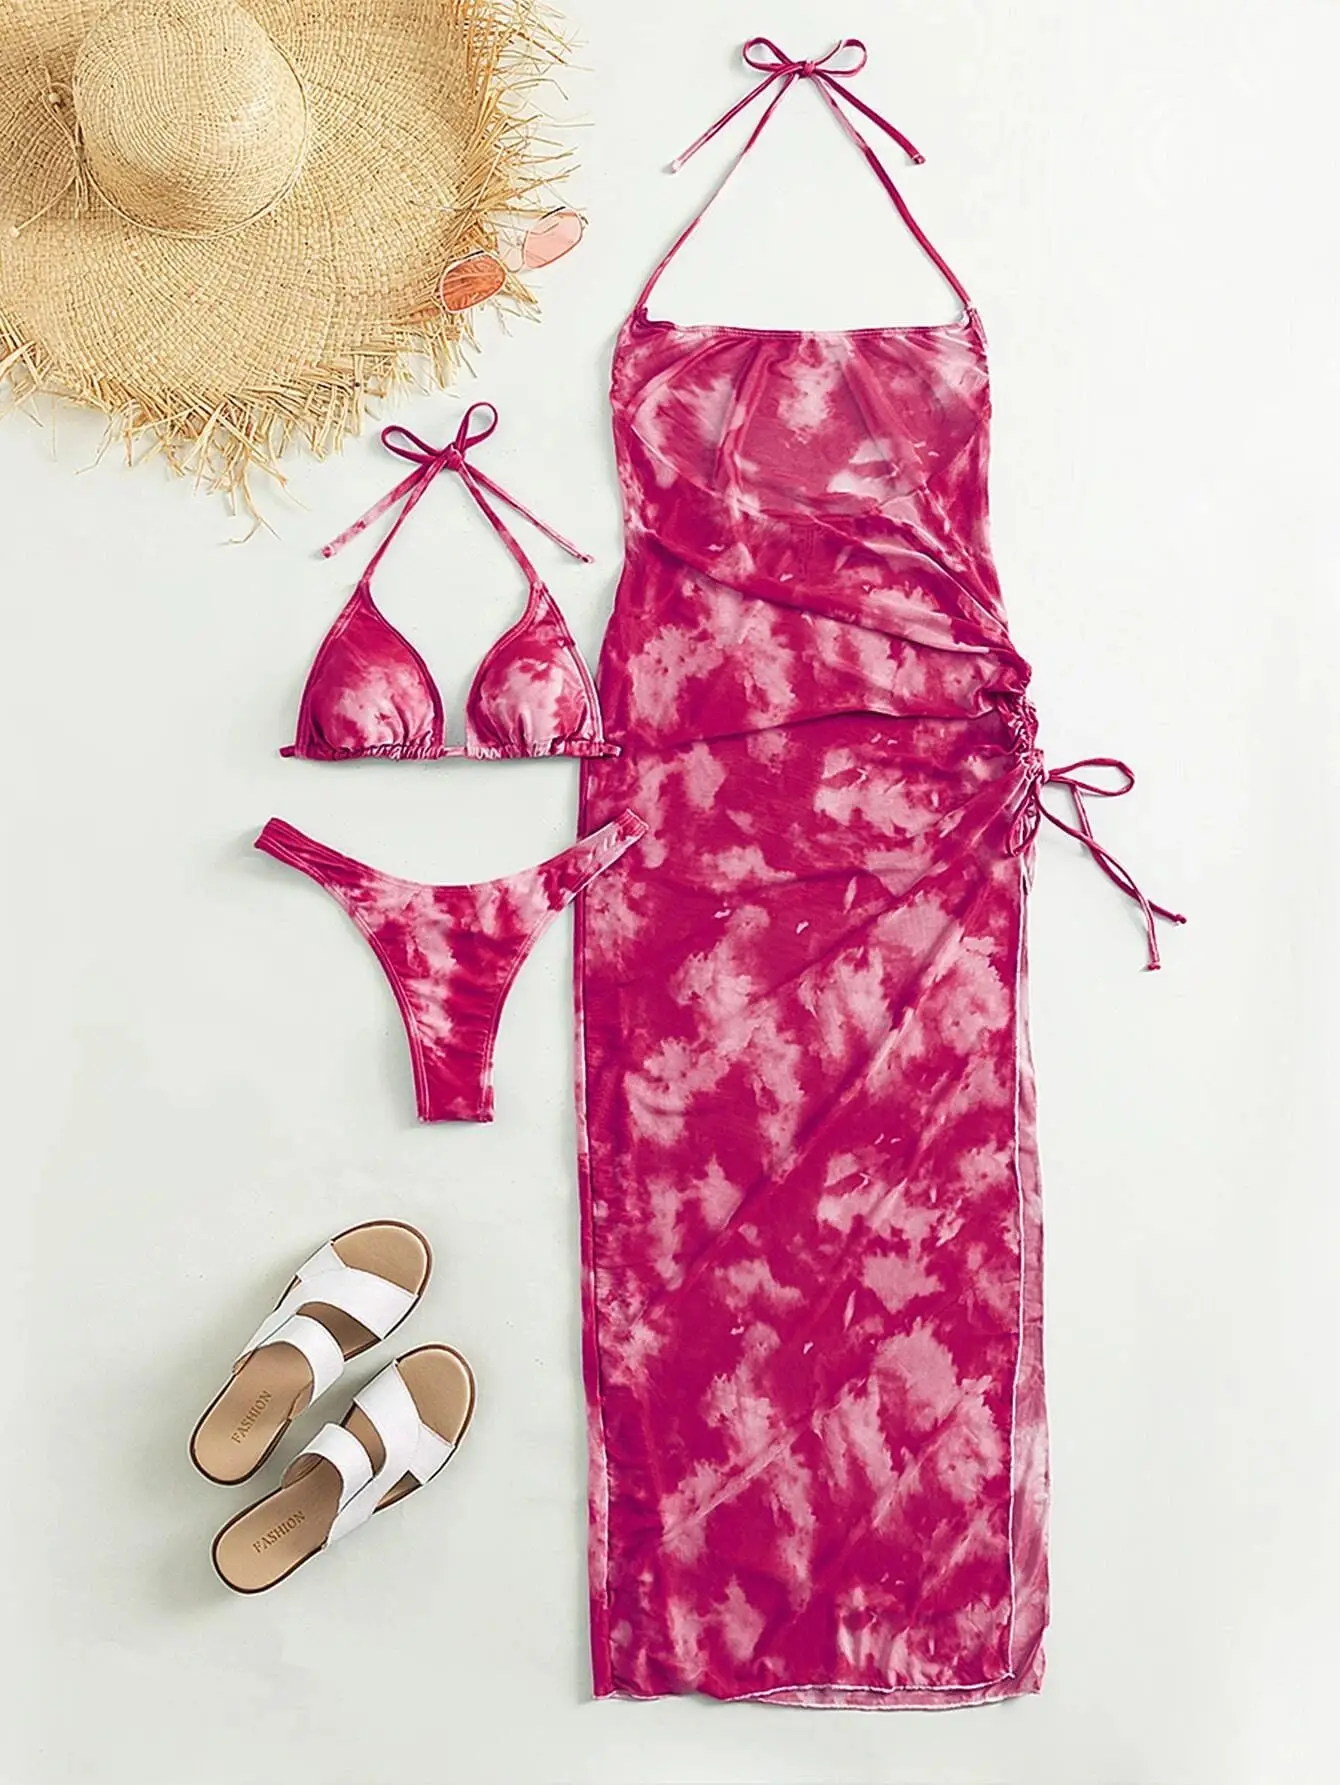 3 Pack Tie Dye Triangle Bikini Set Swimsuit Women Cover Up Swimwear Summer Beach Bathing Suit Bikinis bikini set for beach